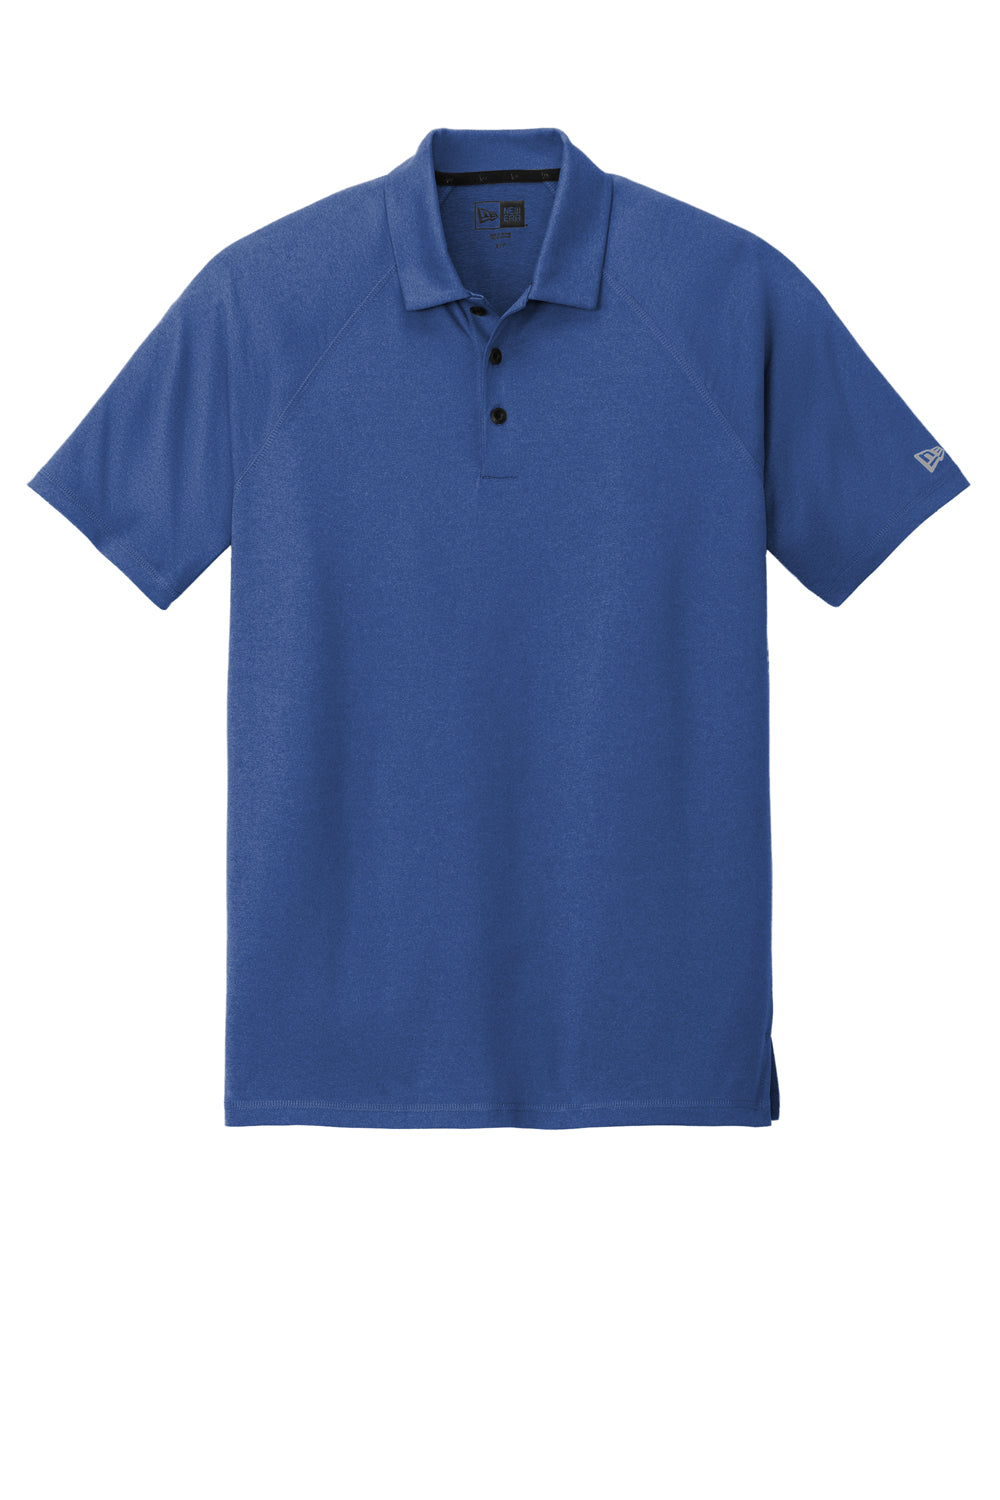 New Era Mens Power Short Sleeve Polo Shirt Heather Royal Blue Flat Front